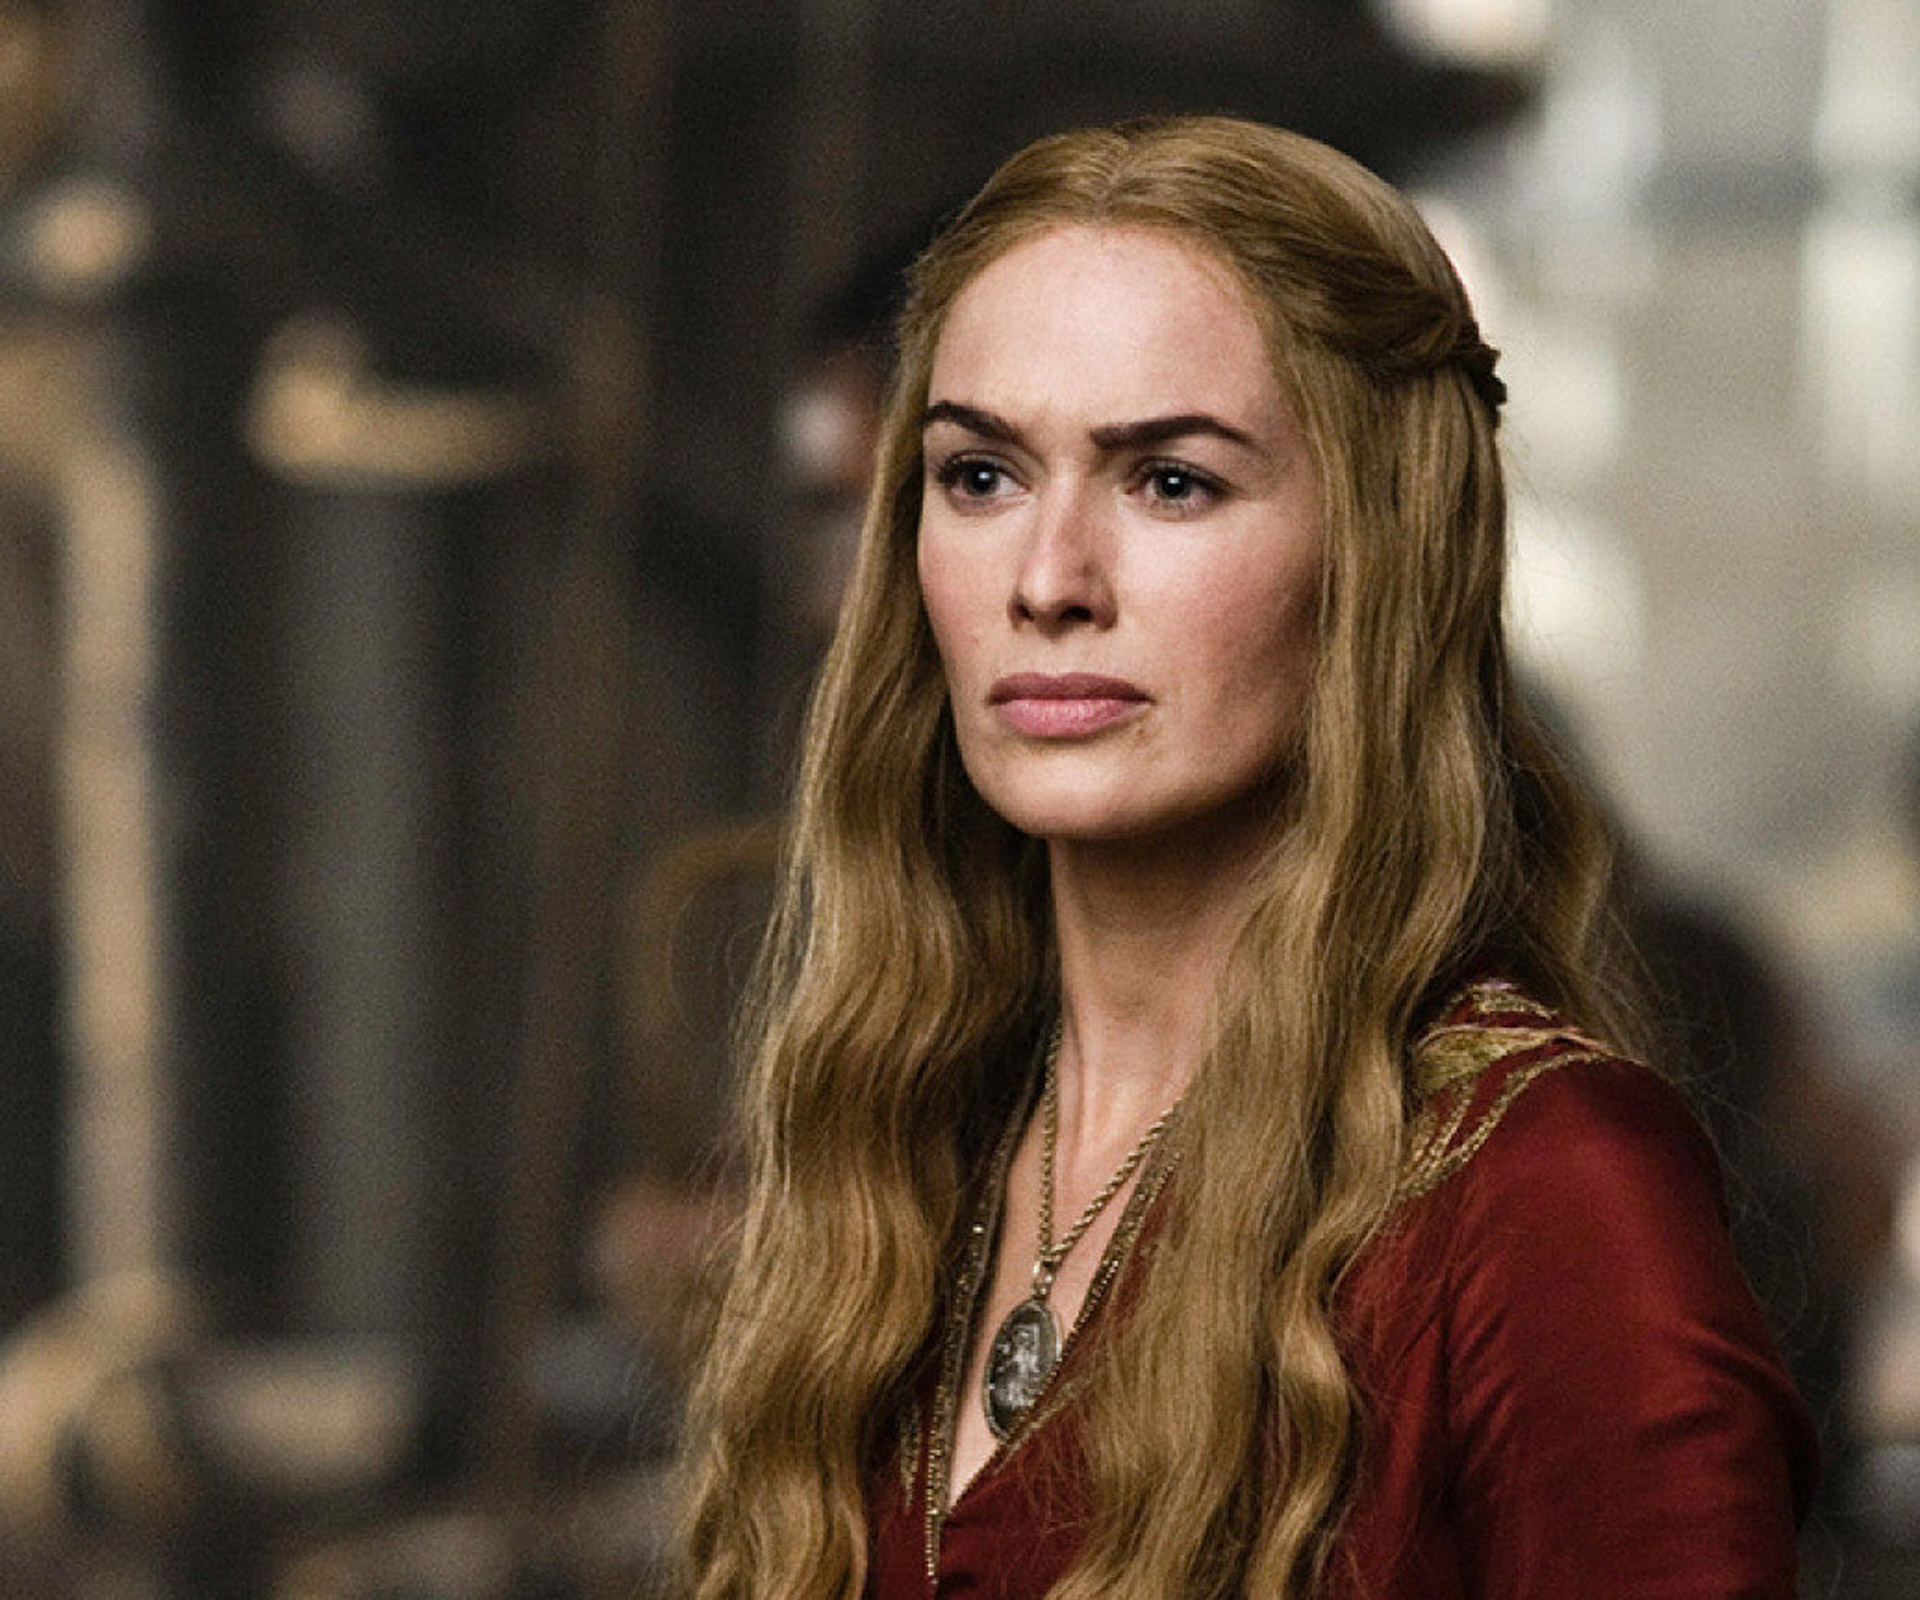 Lena Headey reveals she had undiagnosed postpartum depression while filming Game of Thrones